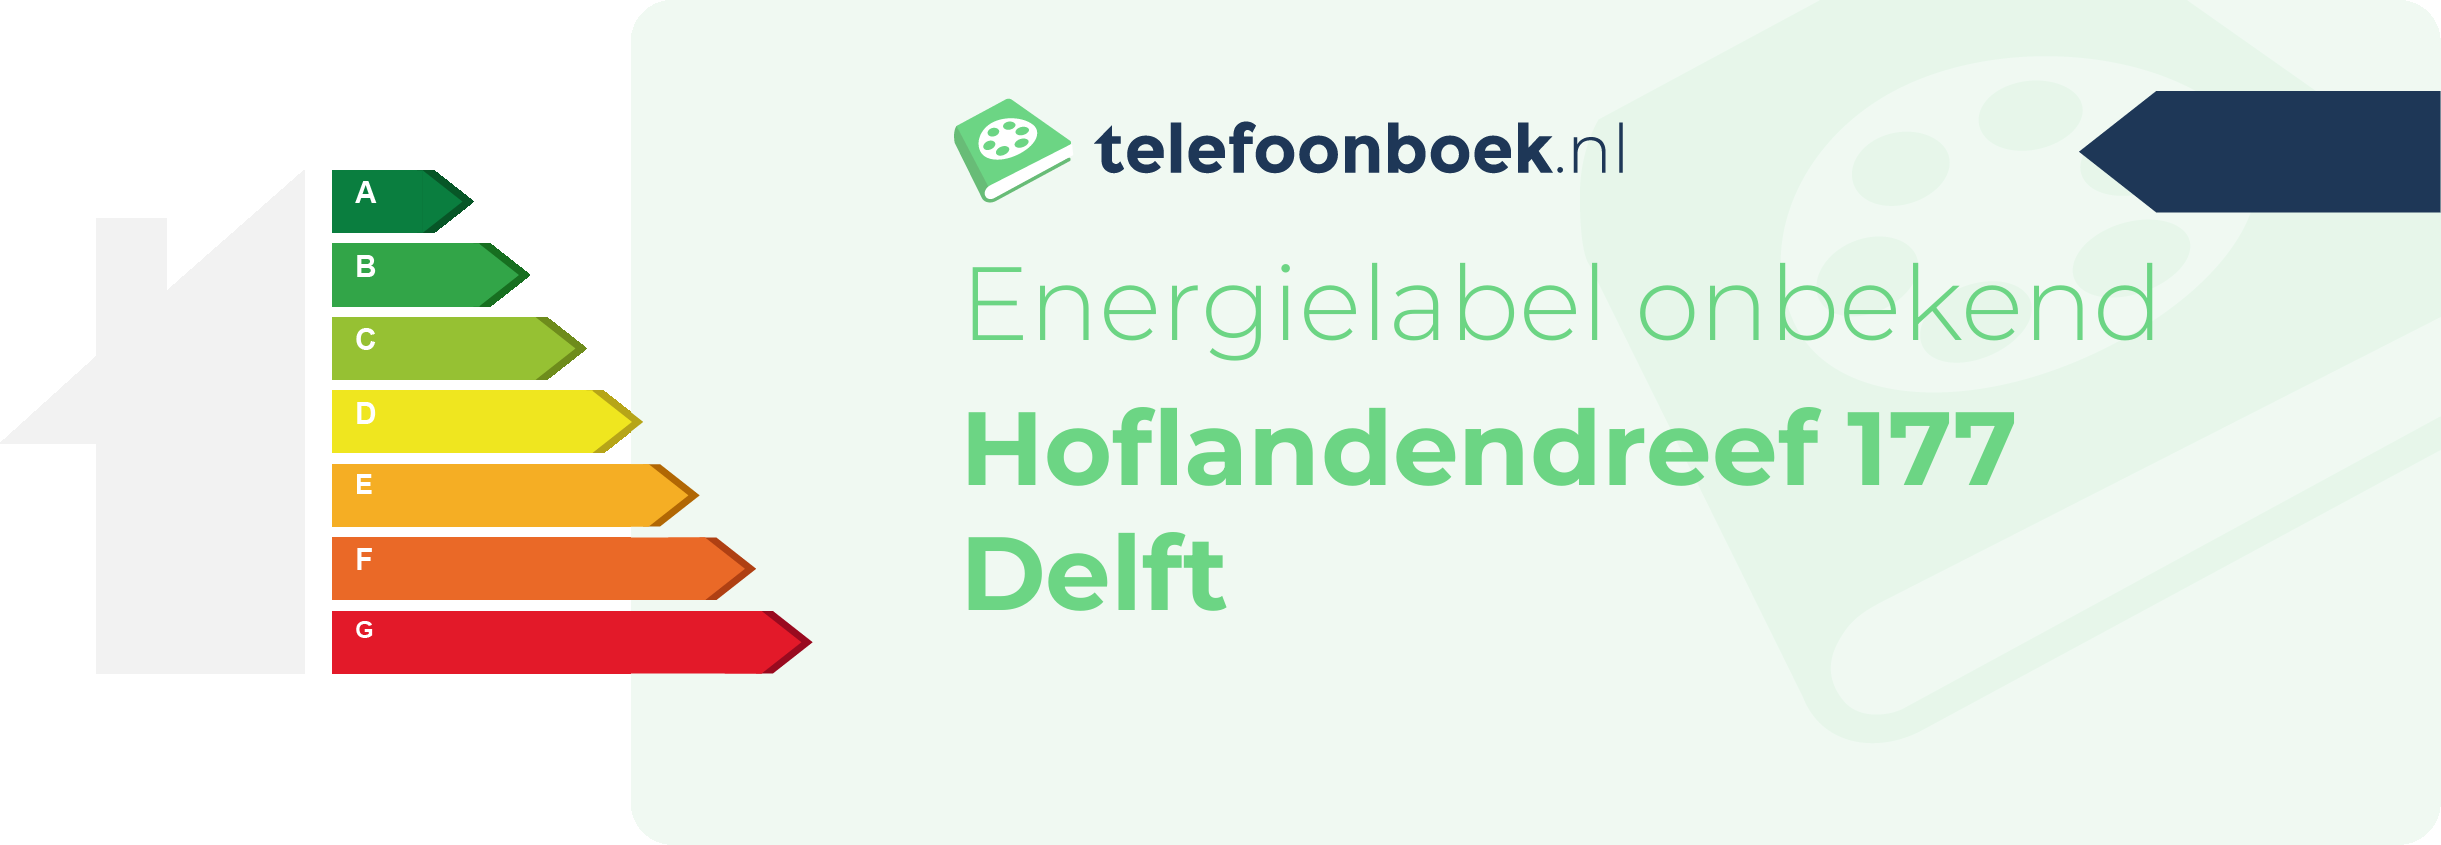 Energielabel Hoflandendreef 177 Delft